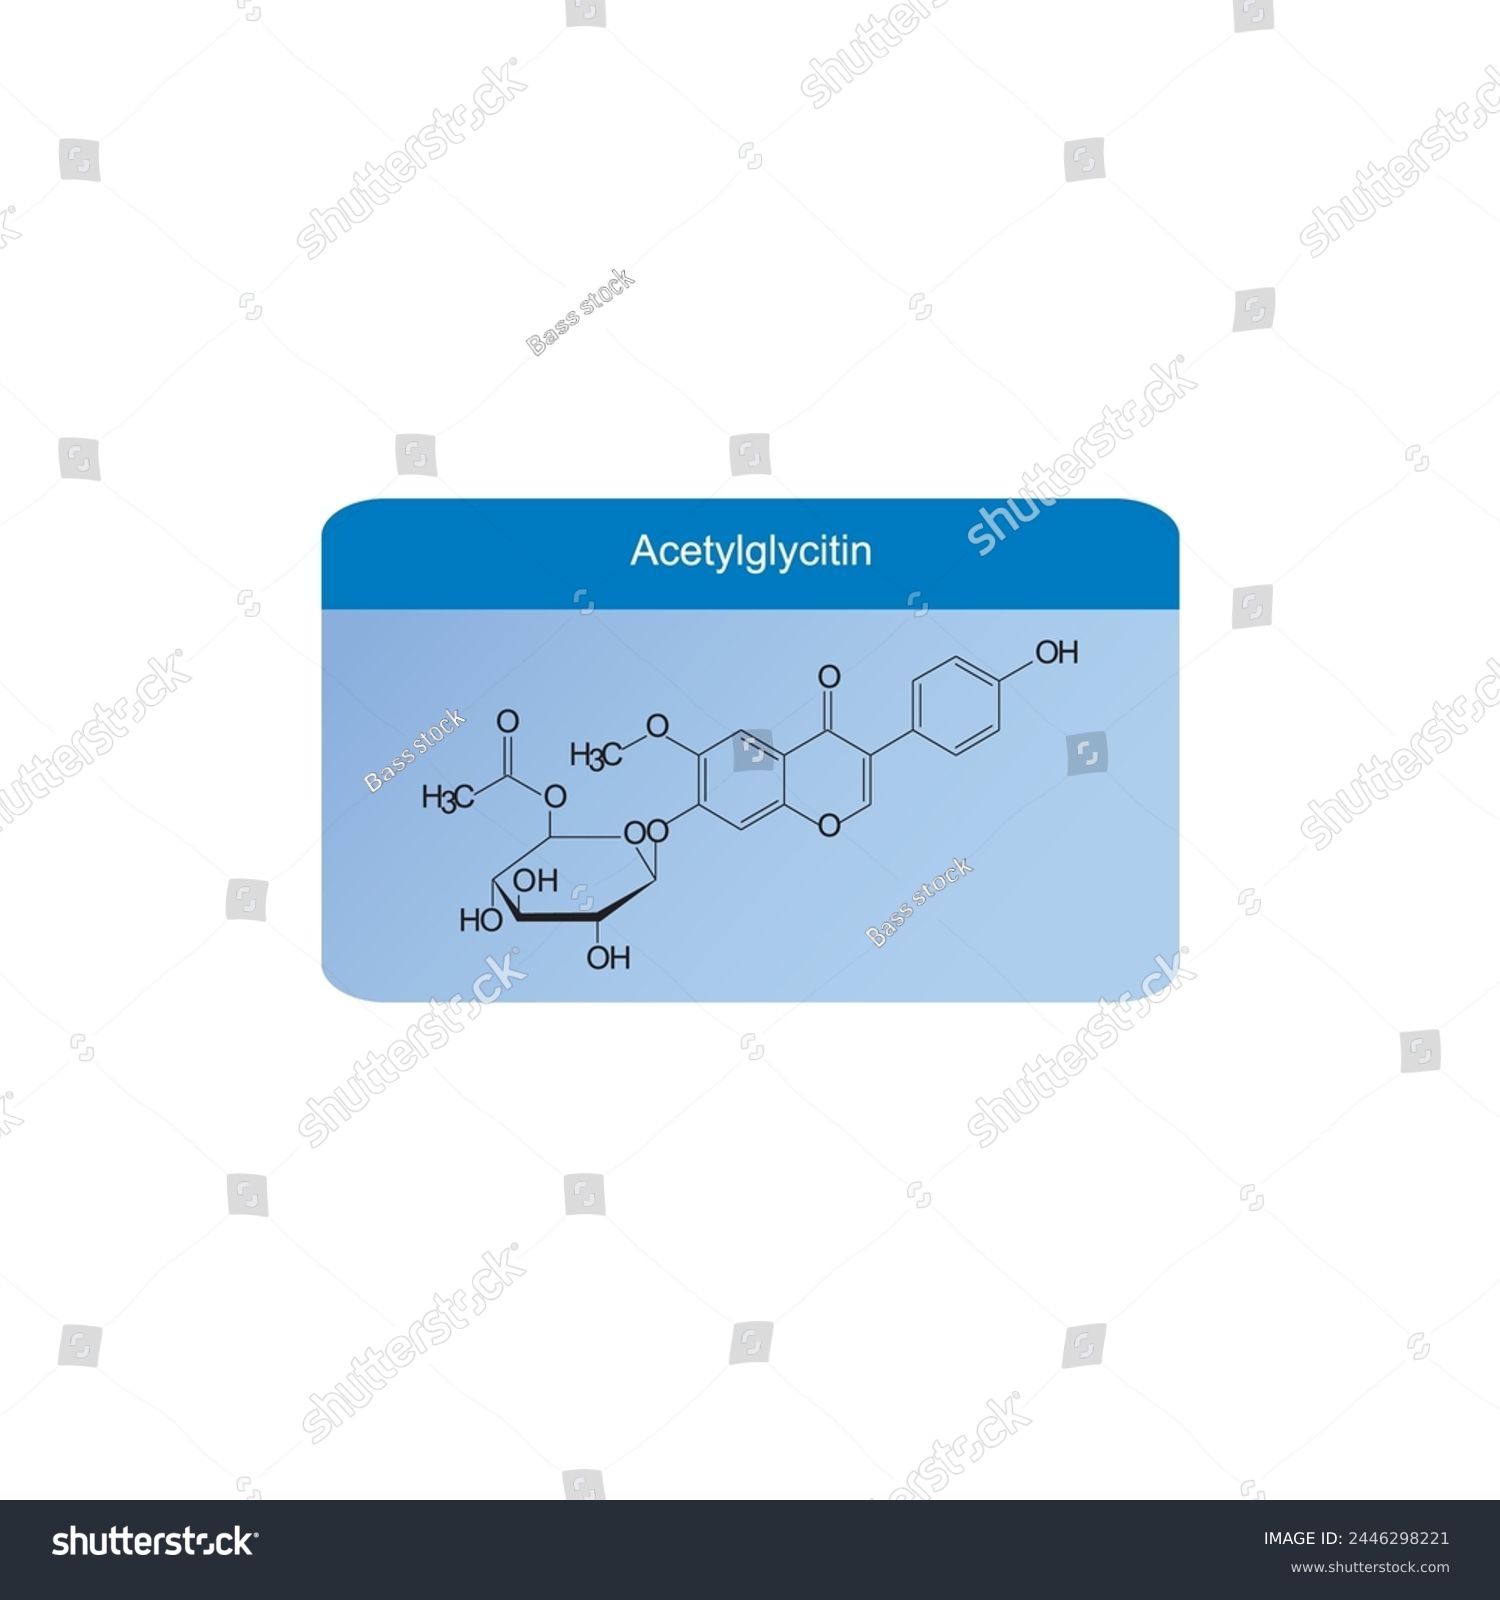 SVG of Acetylglycitin skeletal structure diagram.Isoflavanone compound molecule scientific illustration on blue background. svg